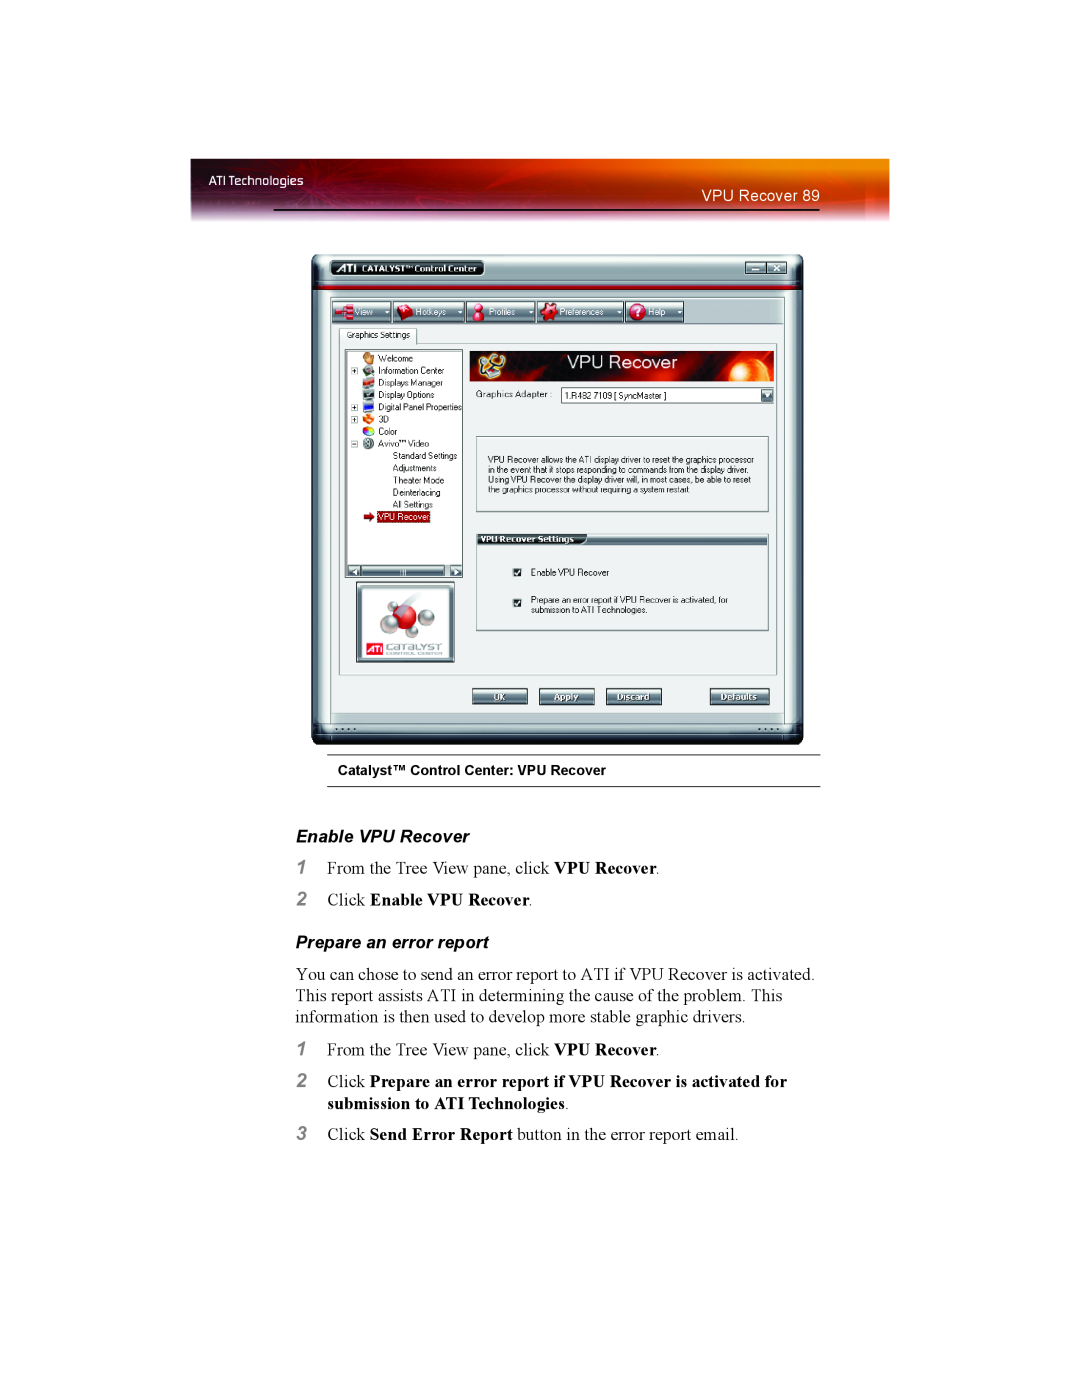 ATI Technologies X1550 SERIES manual Click Enable VPU Recover, Prepare an error report 